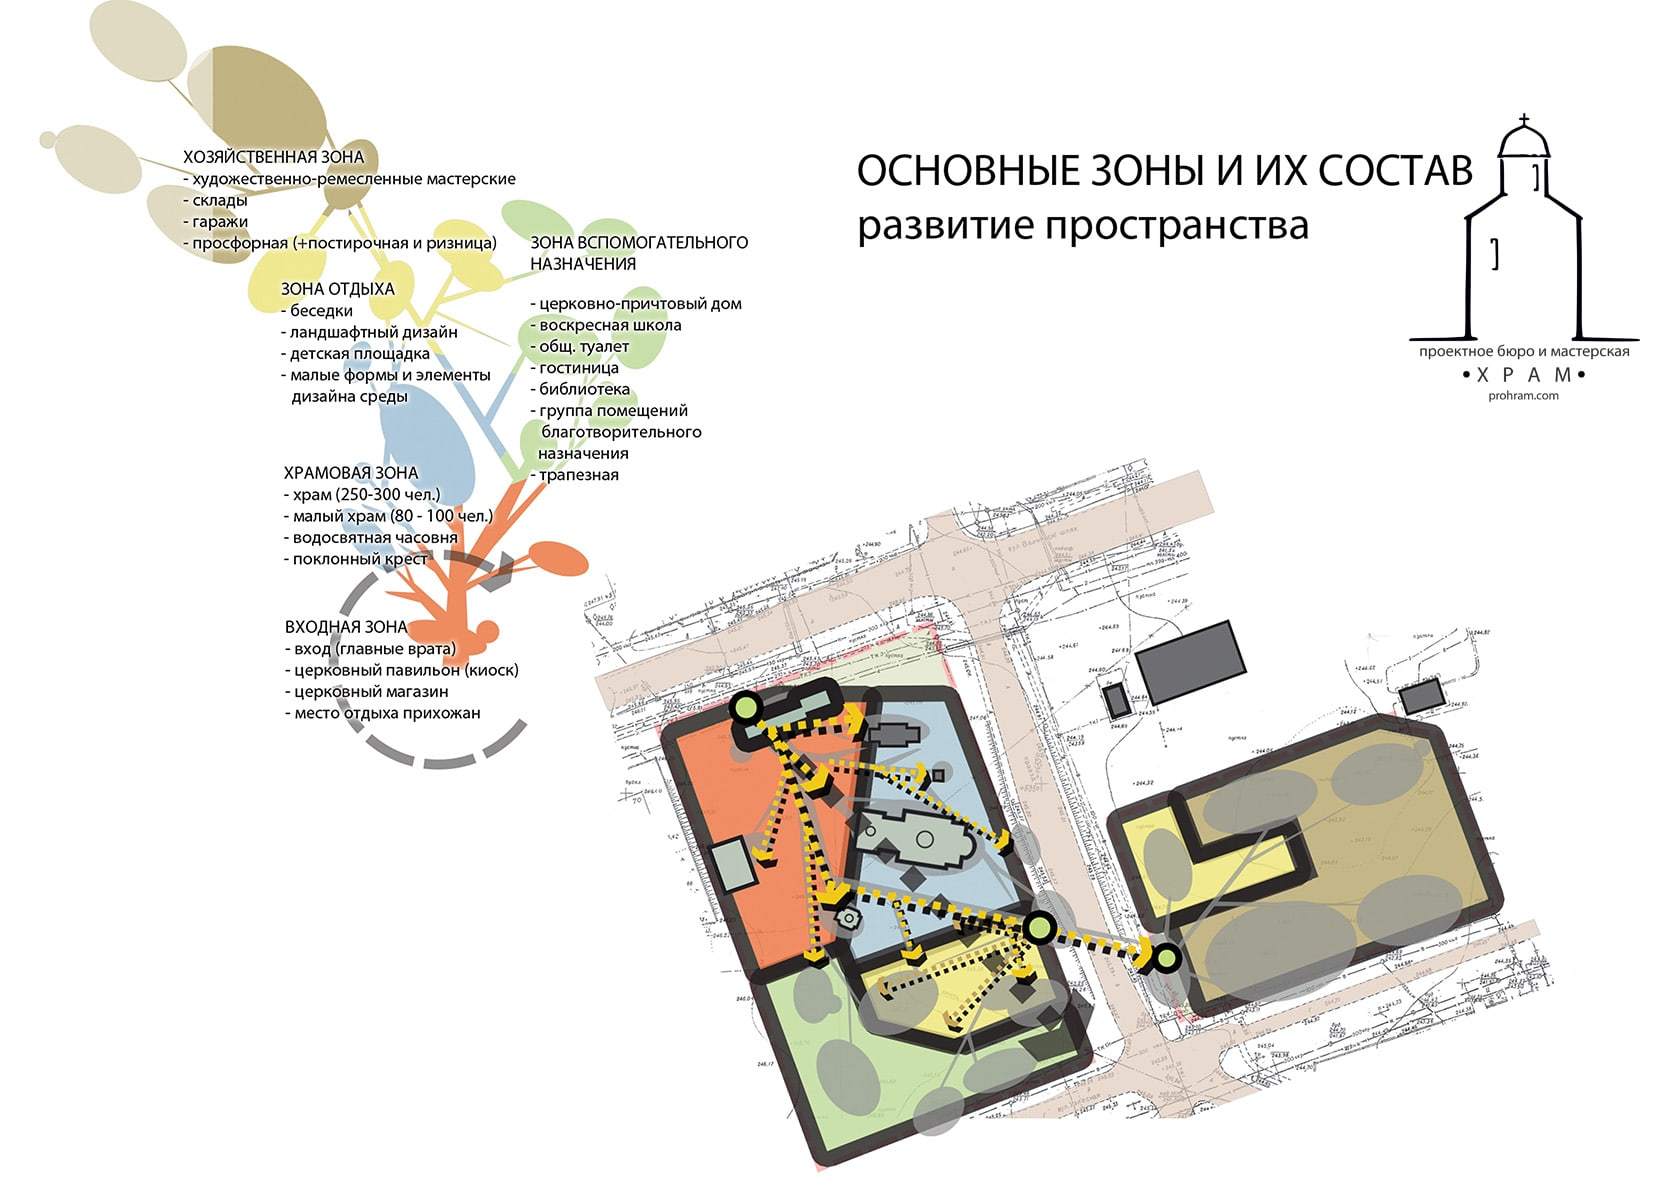 church architecture, church center, orthodox church project, Dormition church center, sacred architecture